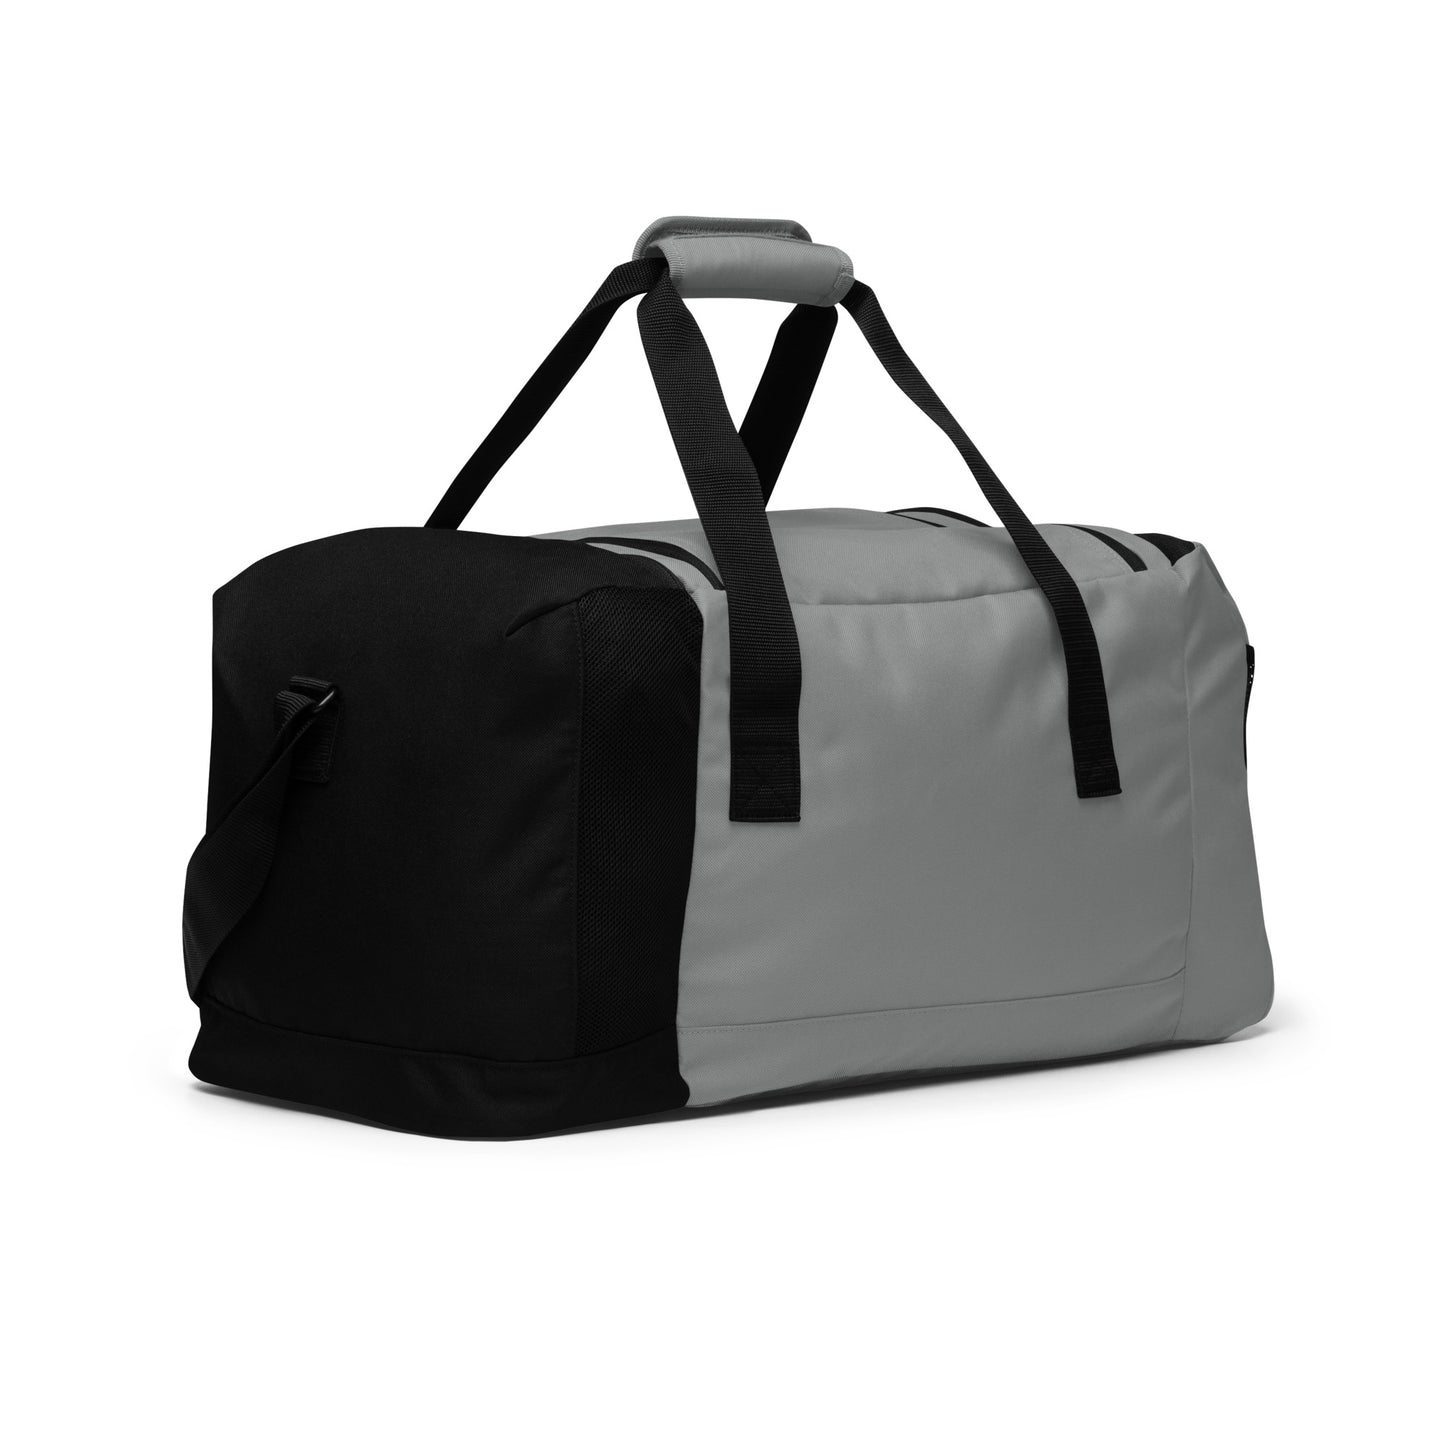 Mannaz - Adidas Duffle Bag